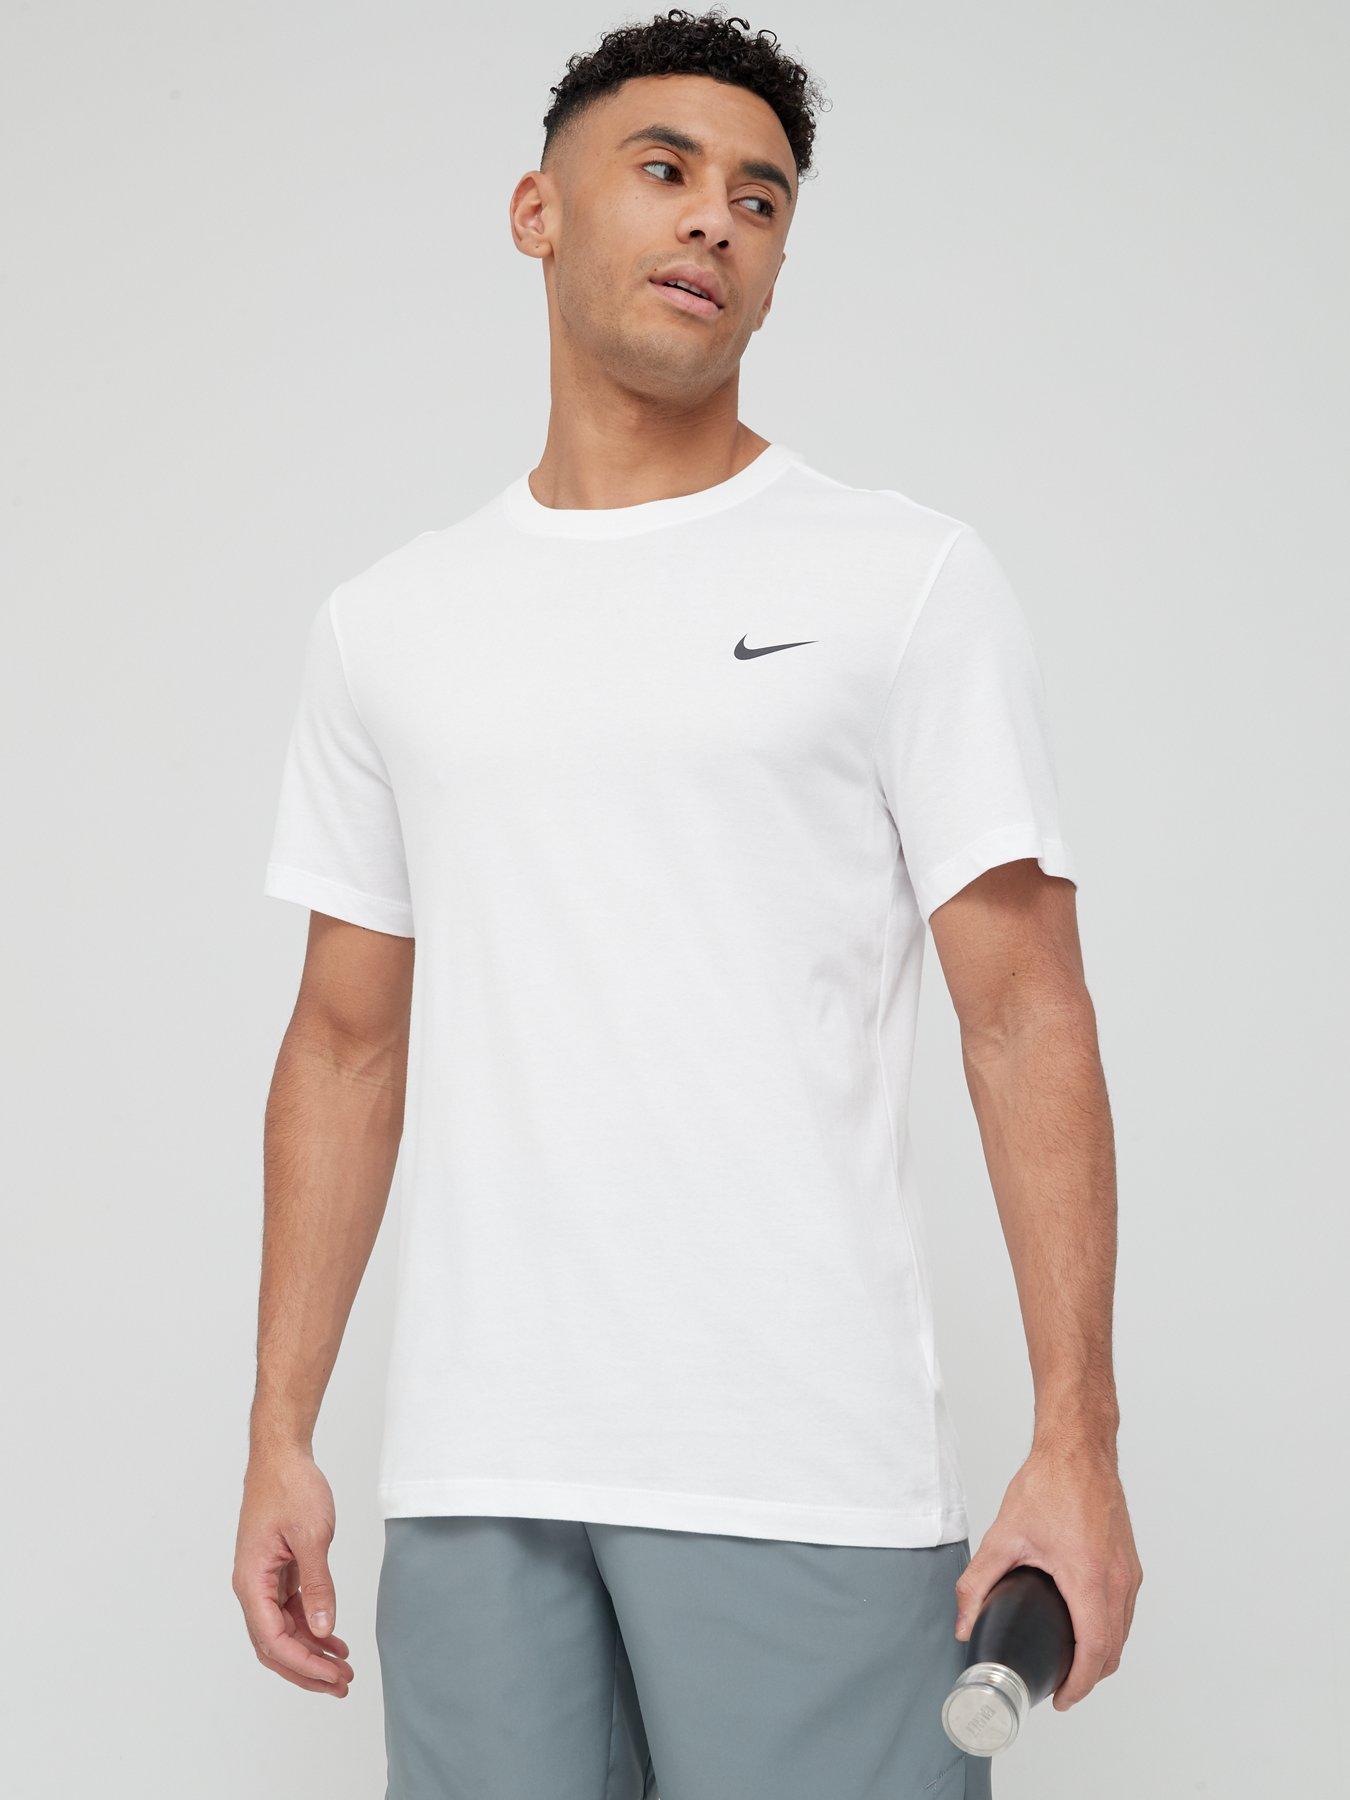  Solid Crew Neck Training T-Shirt (Plus Size) - White